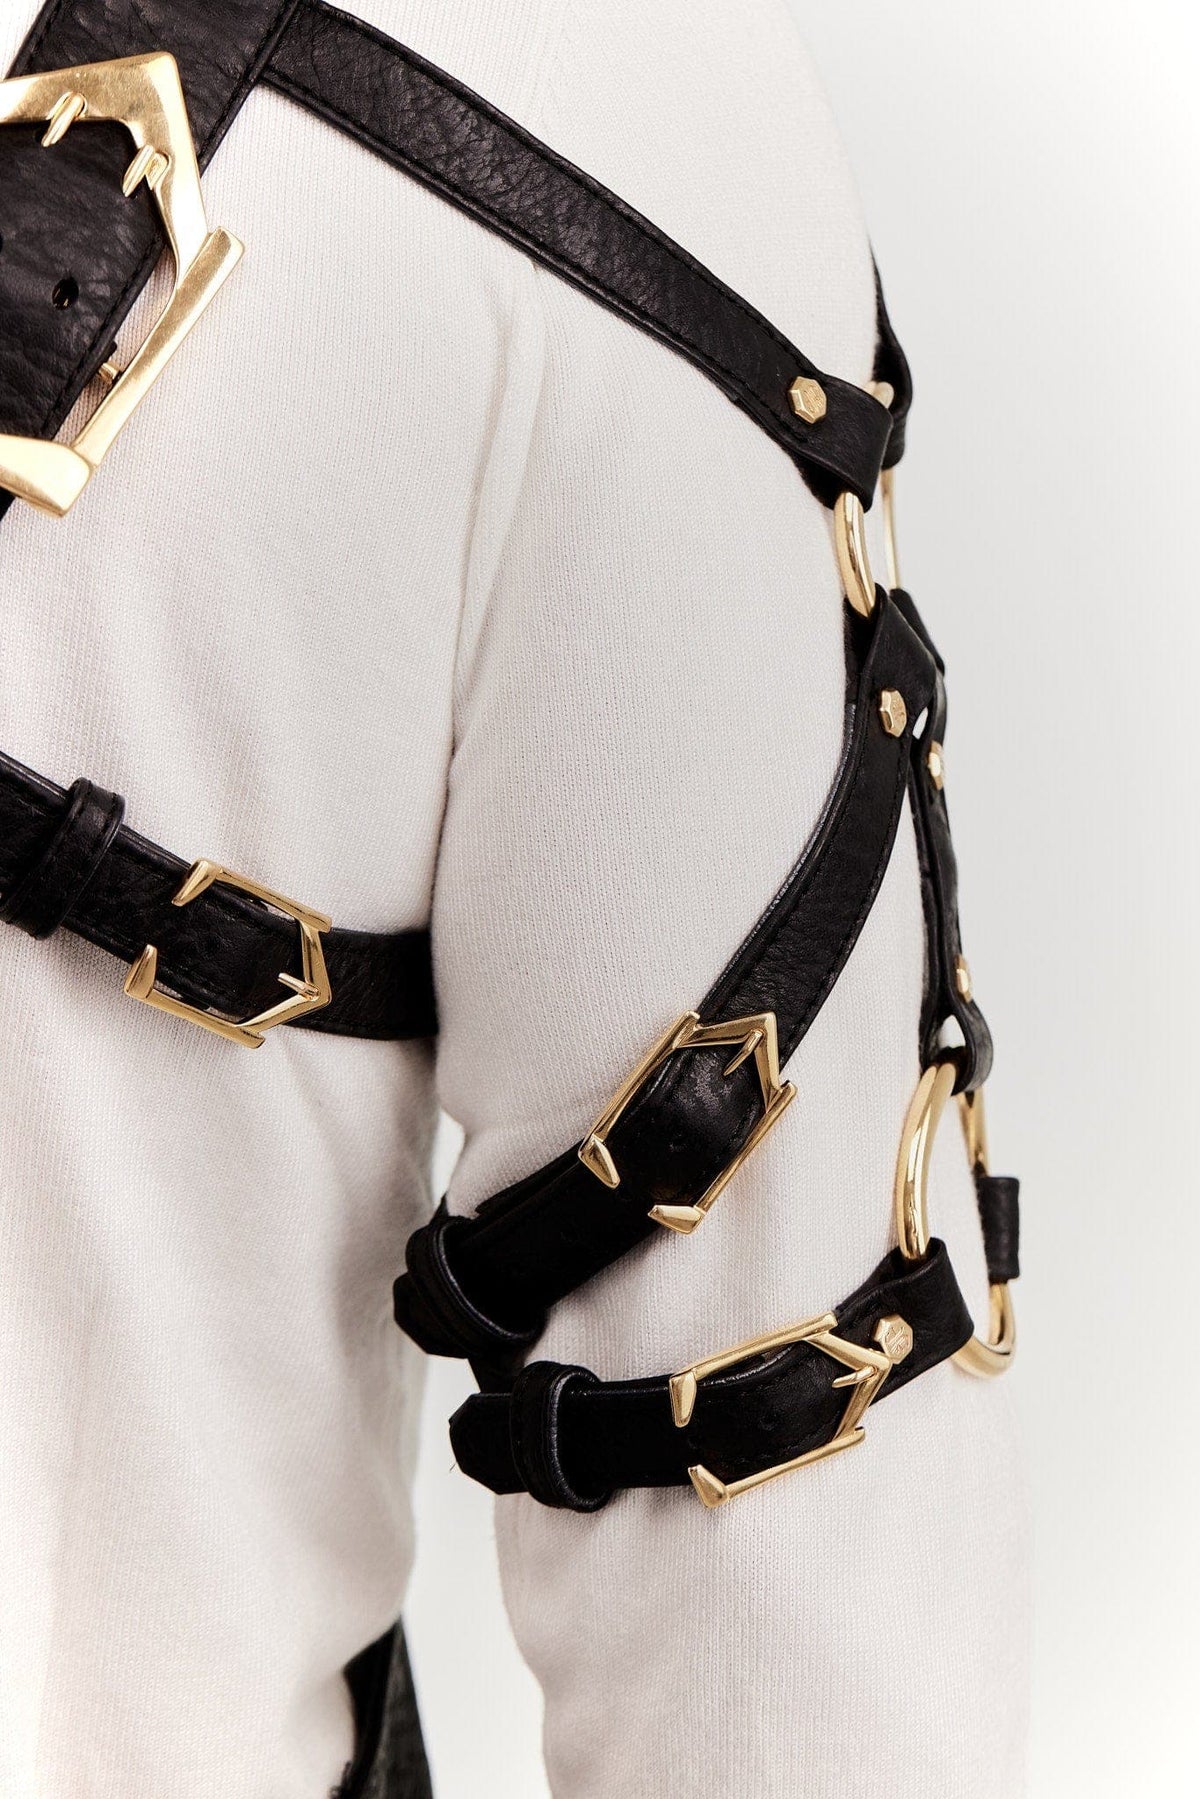 Eskandur men&#39;s black leather luxury premium apron zoom on right shoulder straps with gold hardware